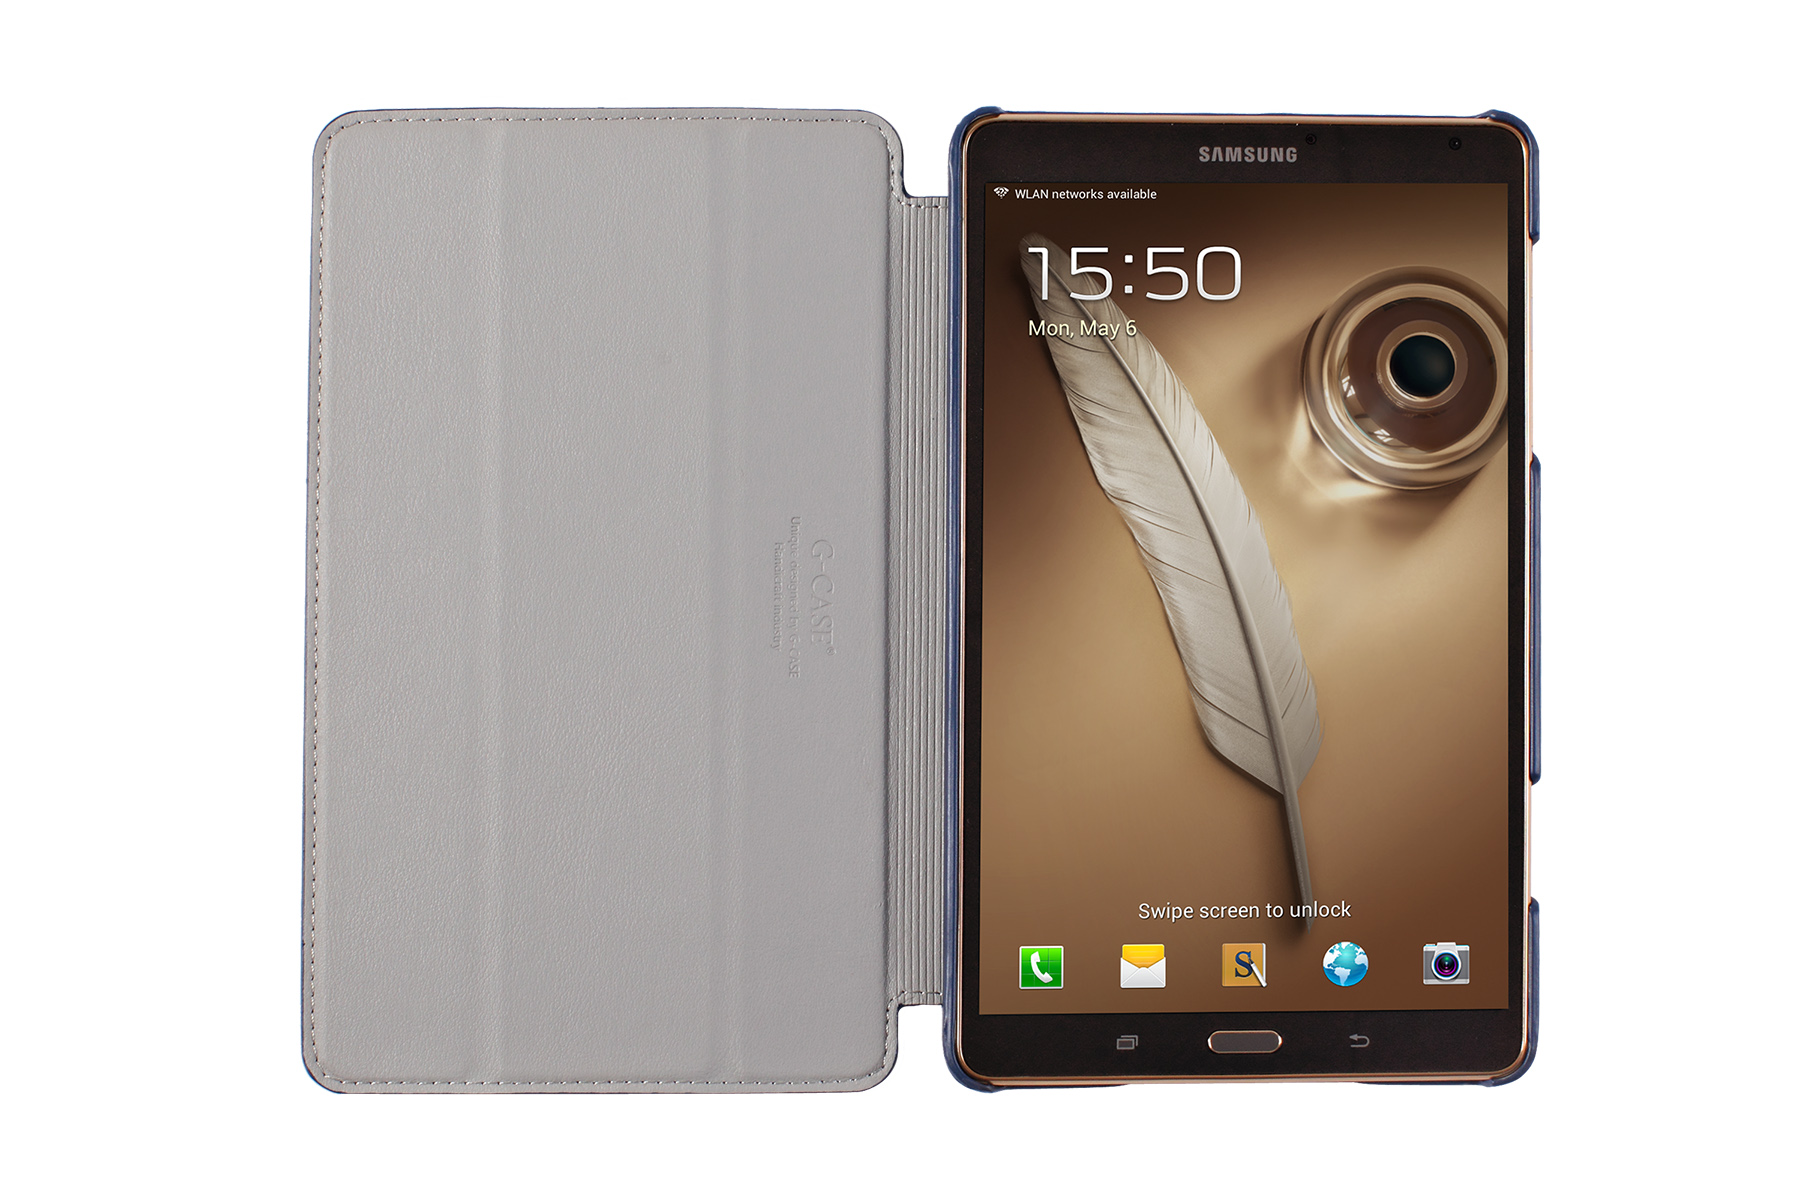 Чехол-книжка G-Case Slim Premium для Samsung Galaxy Tab S 8.4 Черный/синий